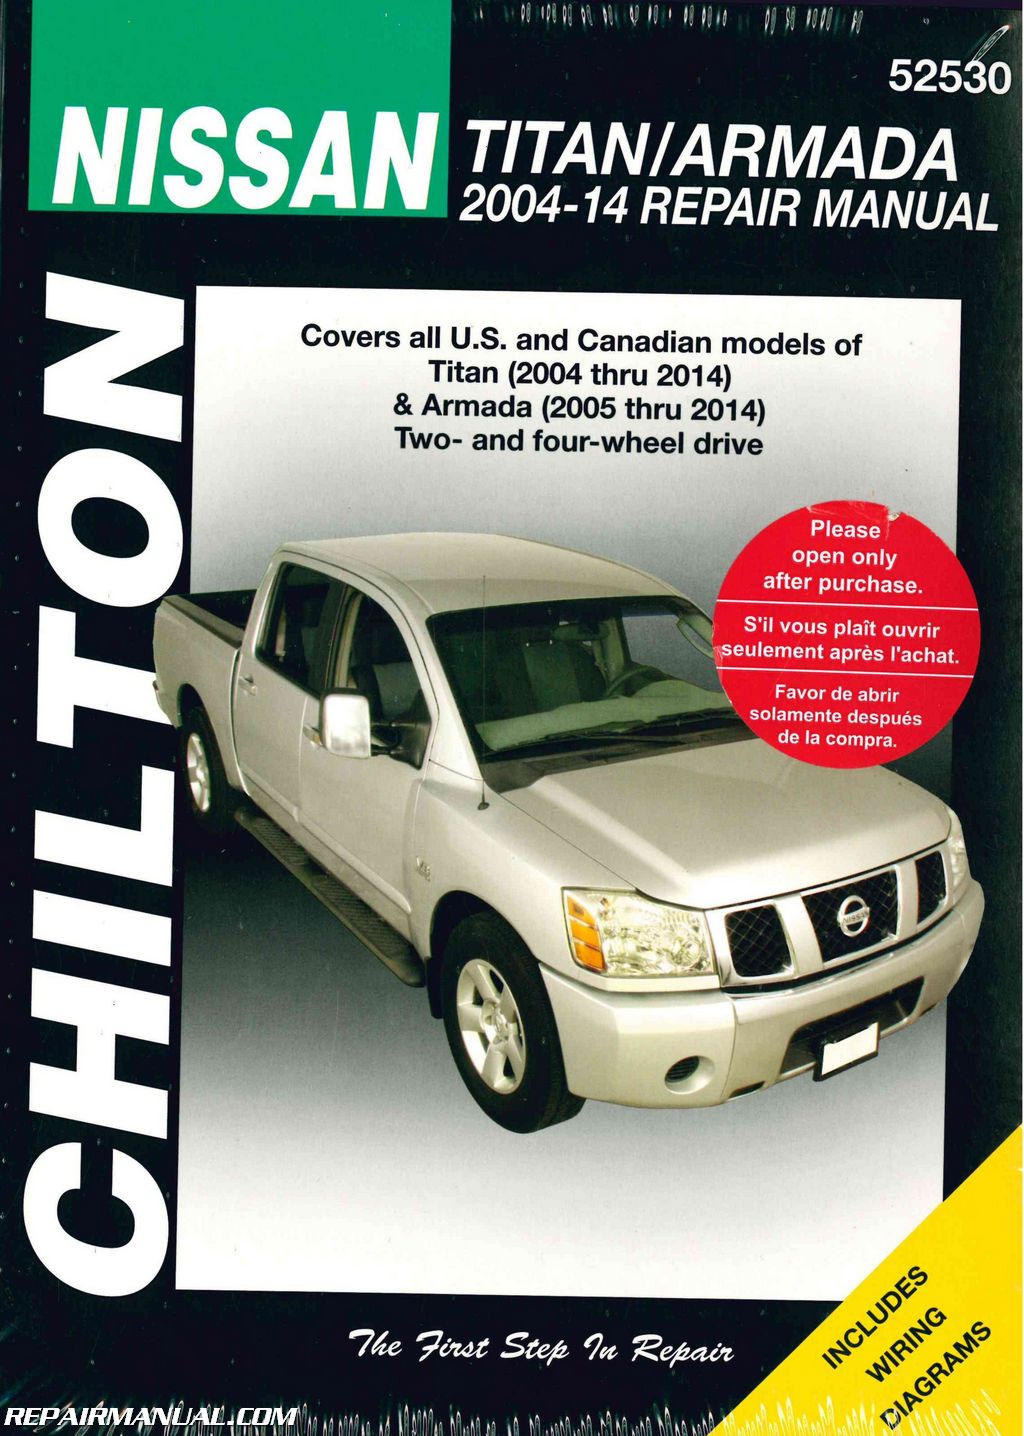 Chilton auto repair manual nissan titan #5